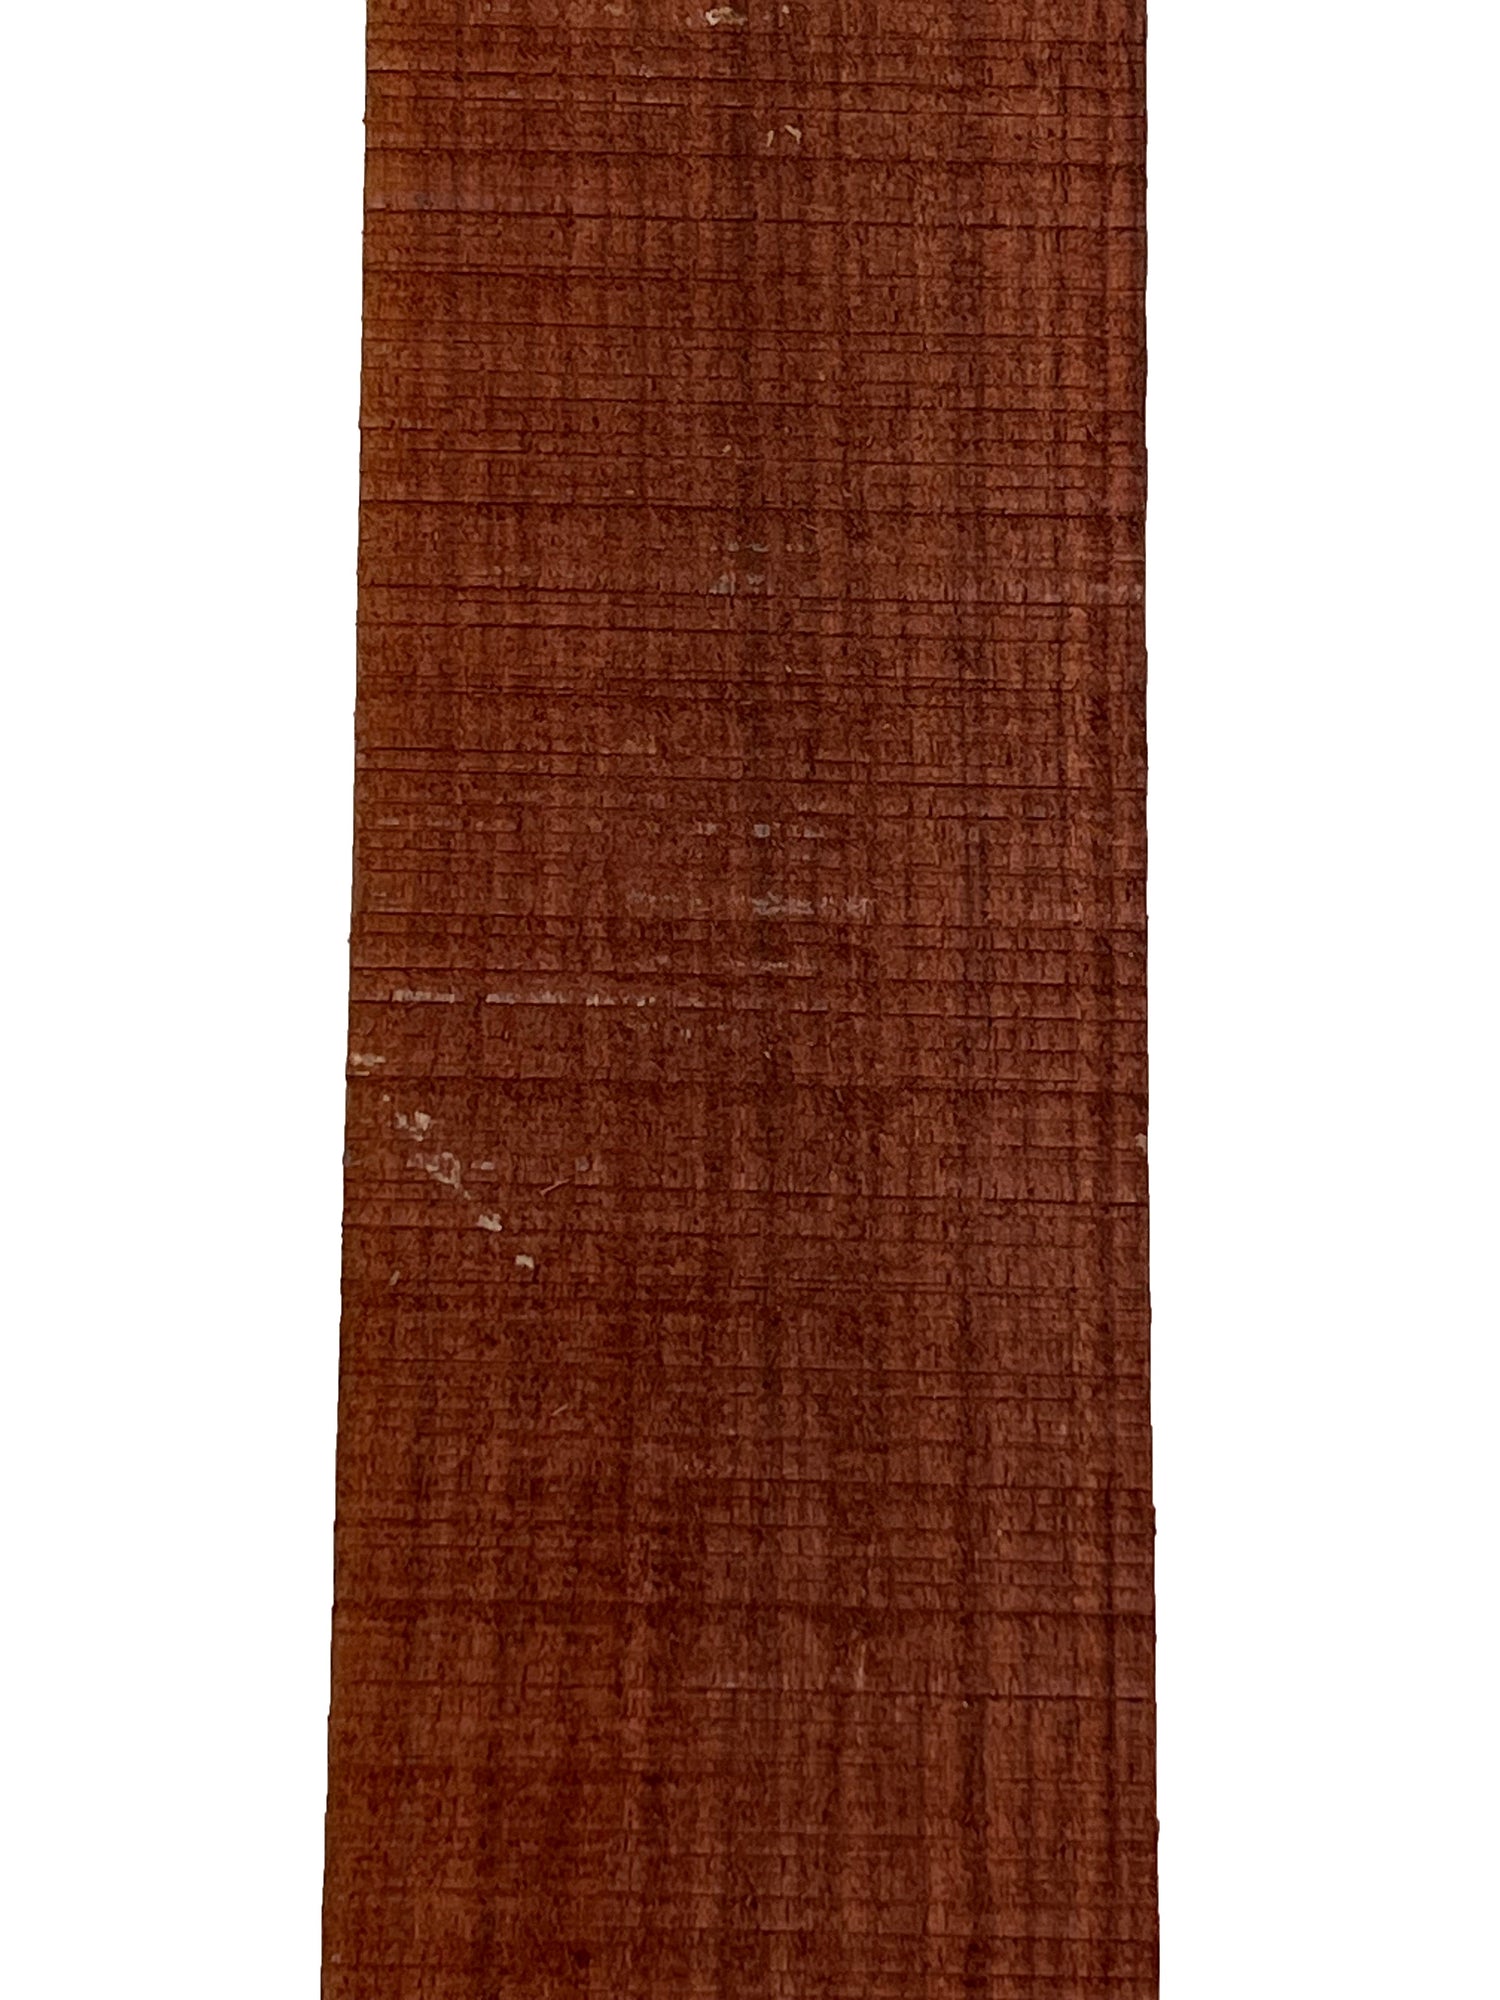 East Indian Rosewood Guitar Fingerboard Blank - Exotic Wood Zone - Buy online Across USA